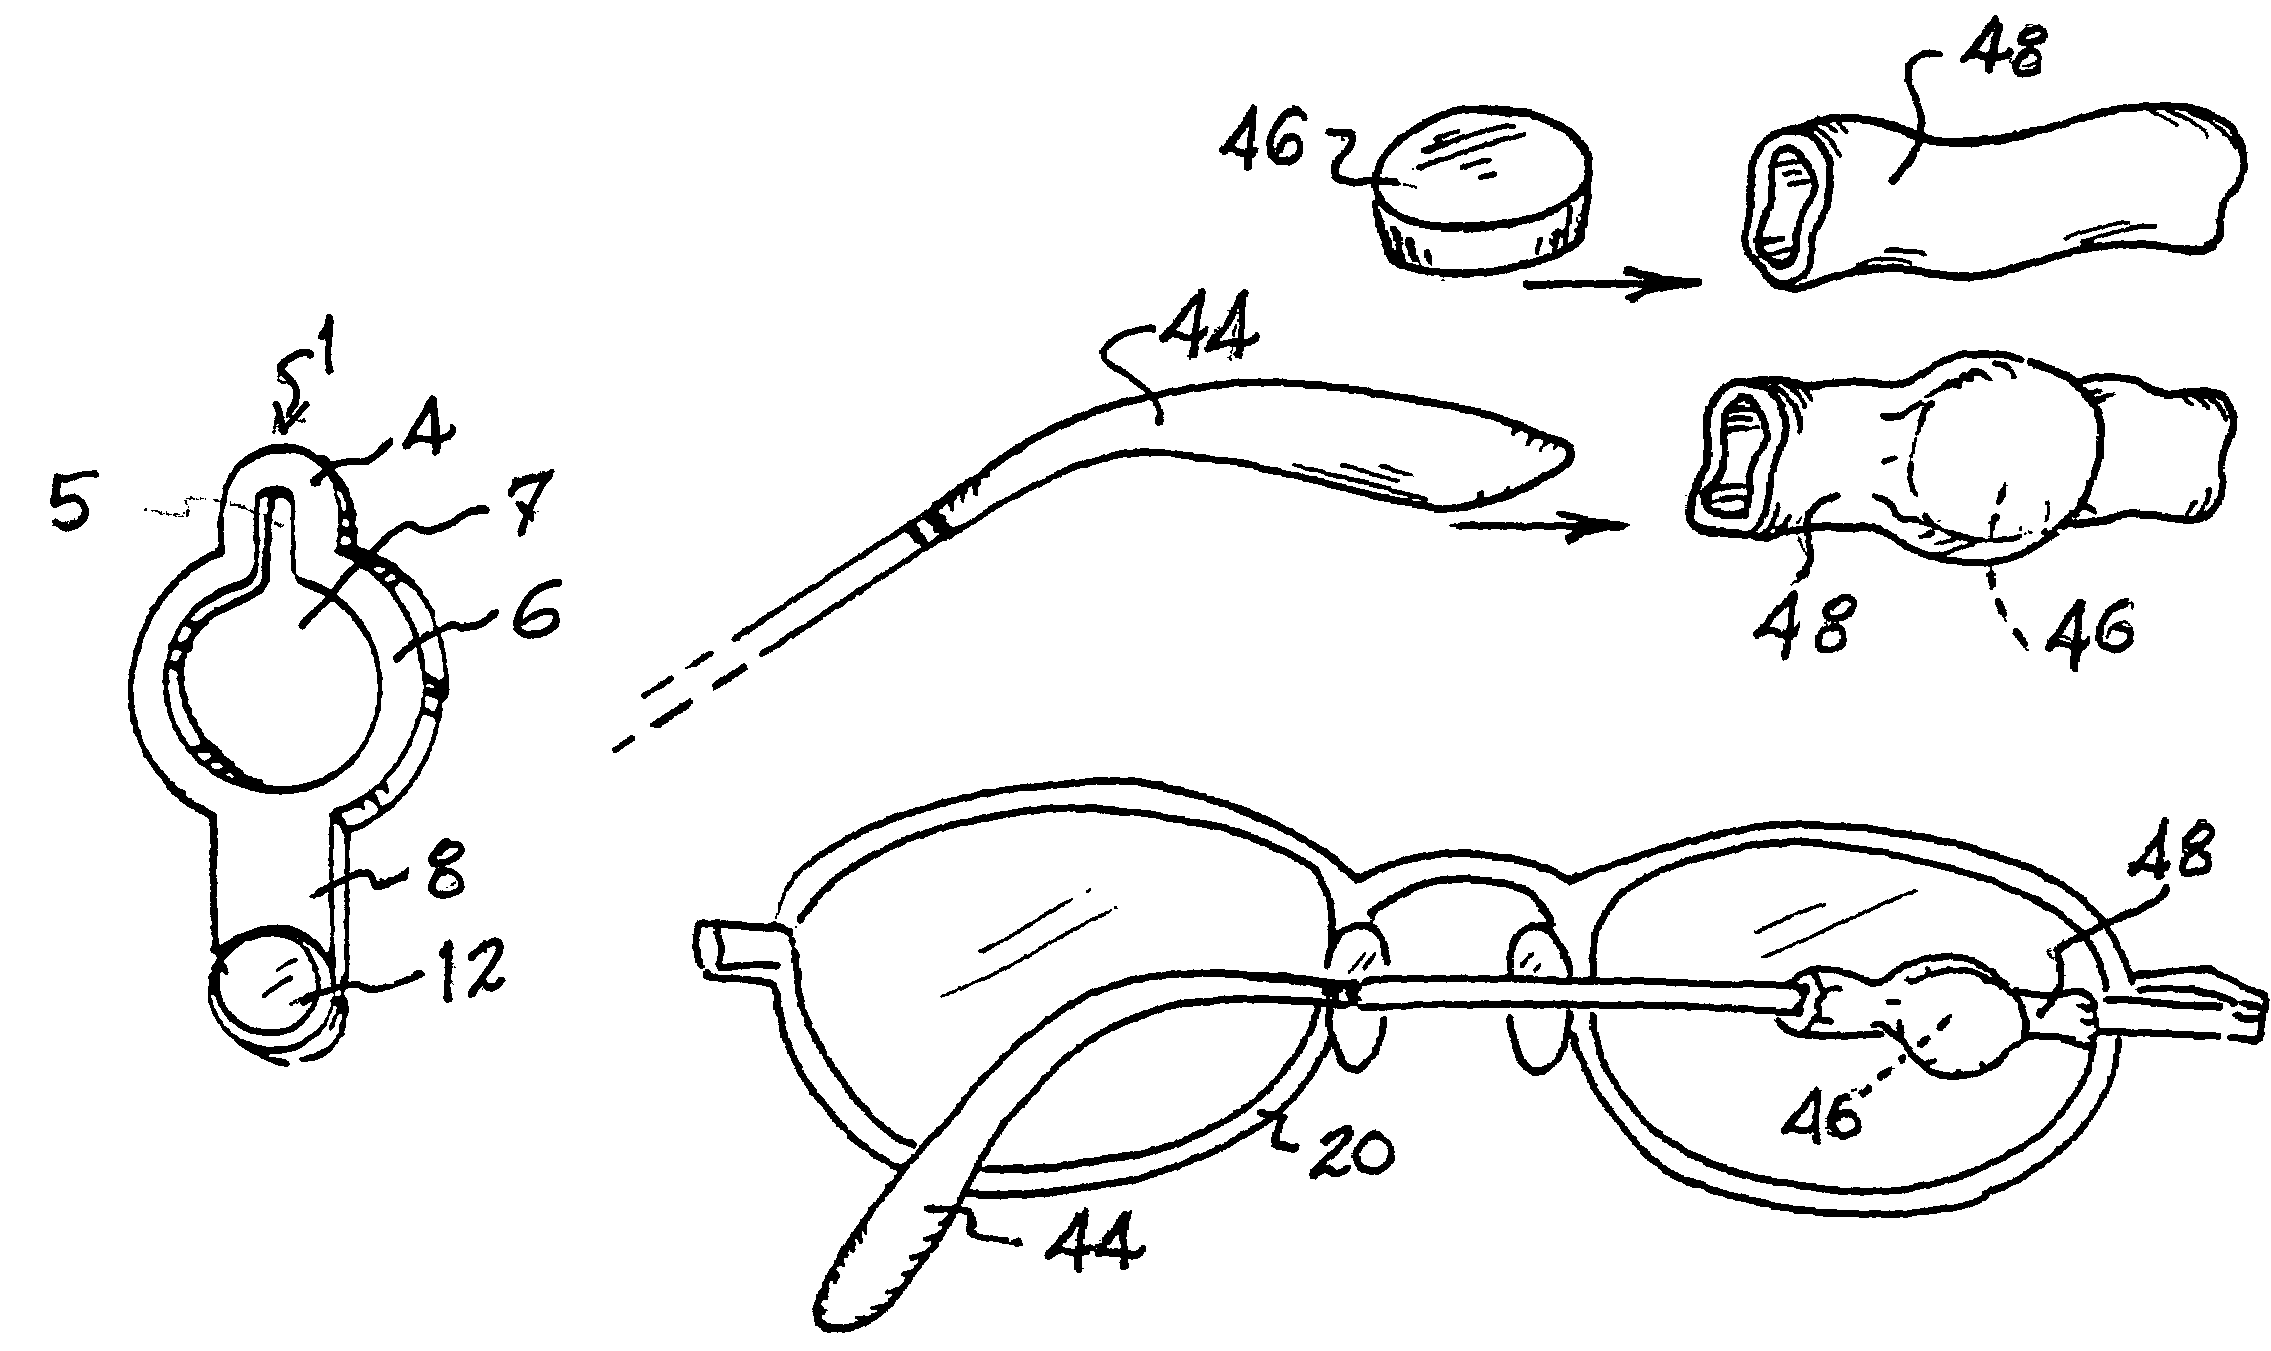 Portable securement system for eyewear